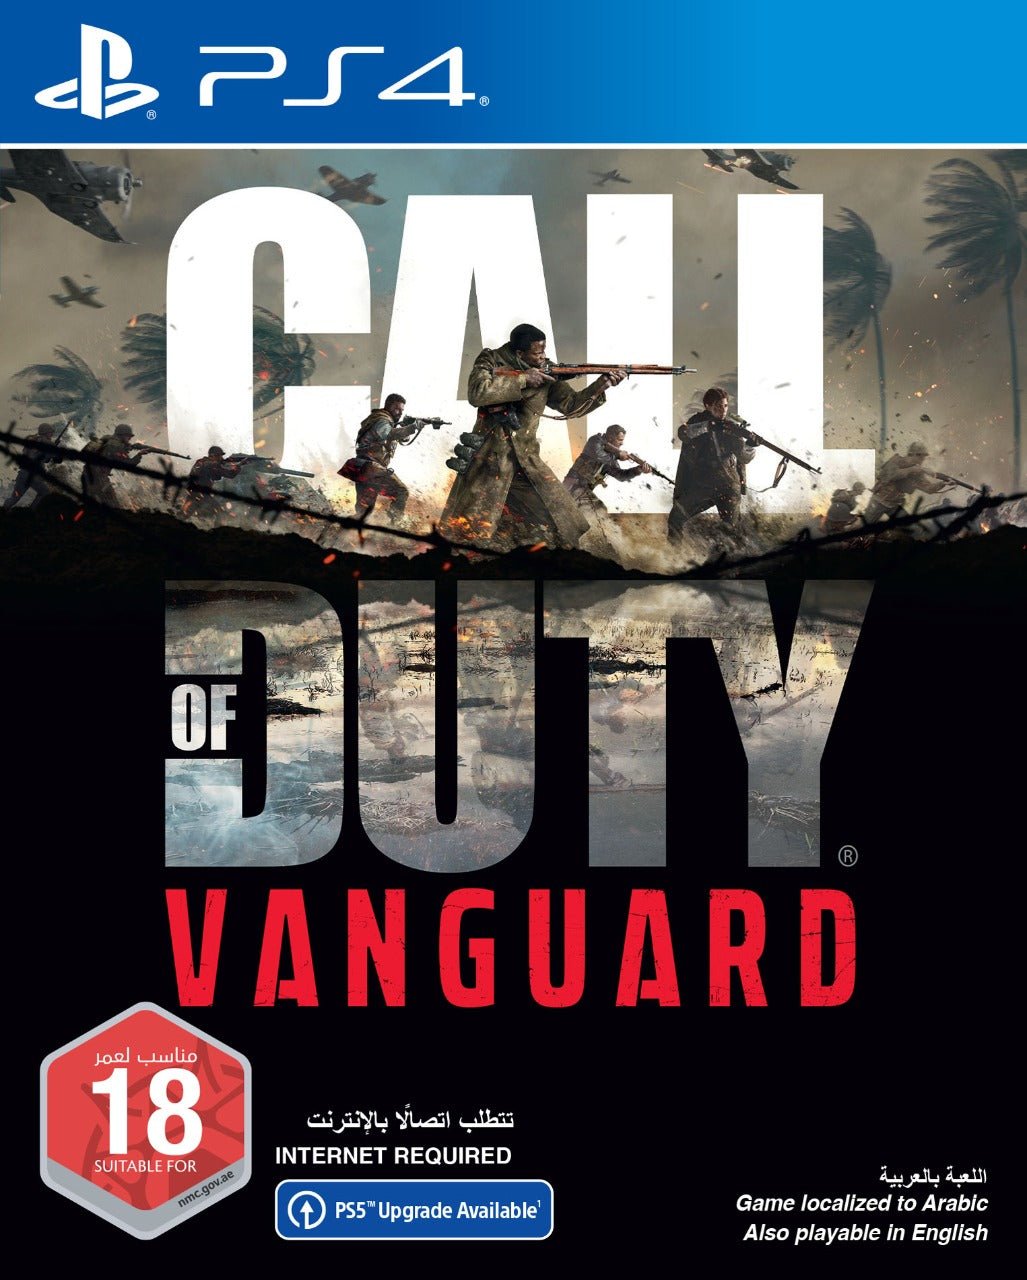 Call of Duty®: Vanguard For PlayStation 4 “Arabic” - Level UpSLEDGEHAMMER GAMESPlaystation Video Games5.03E+12